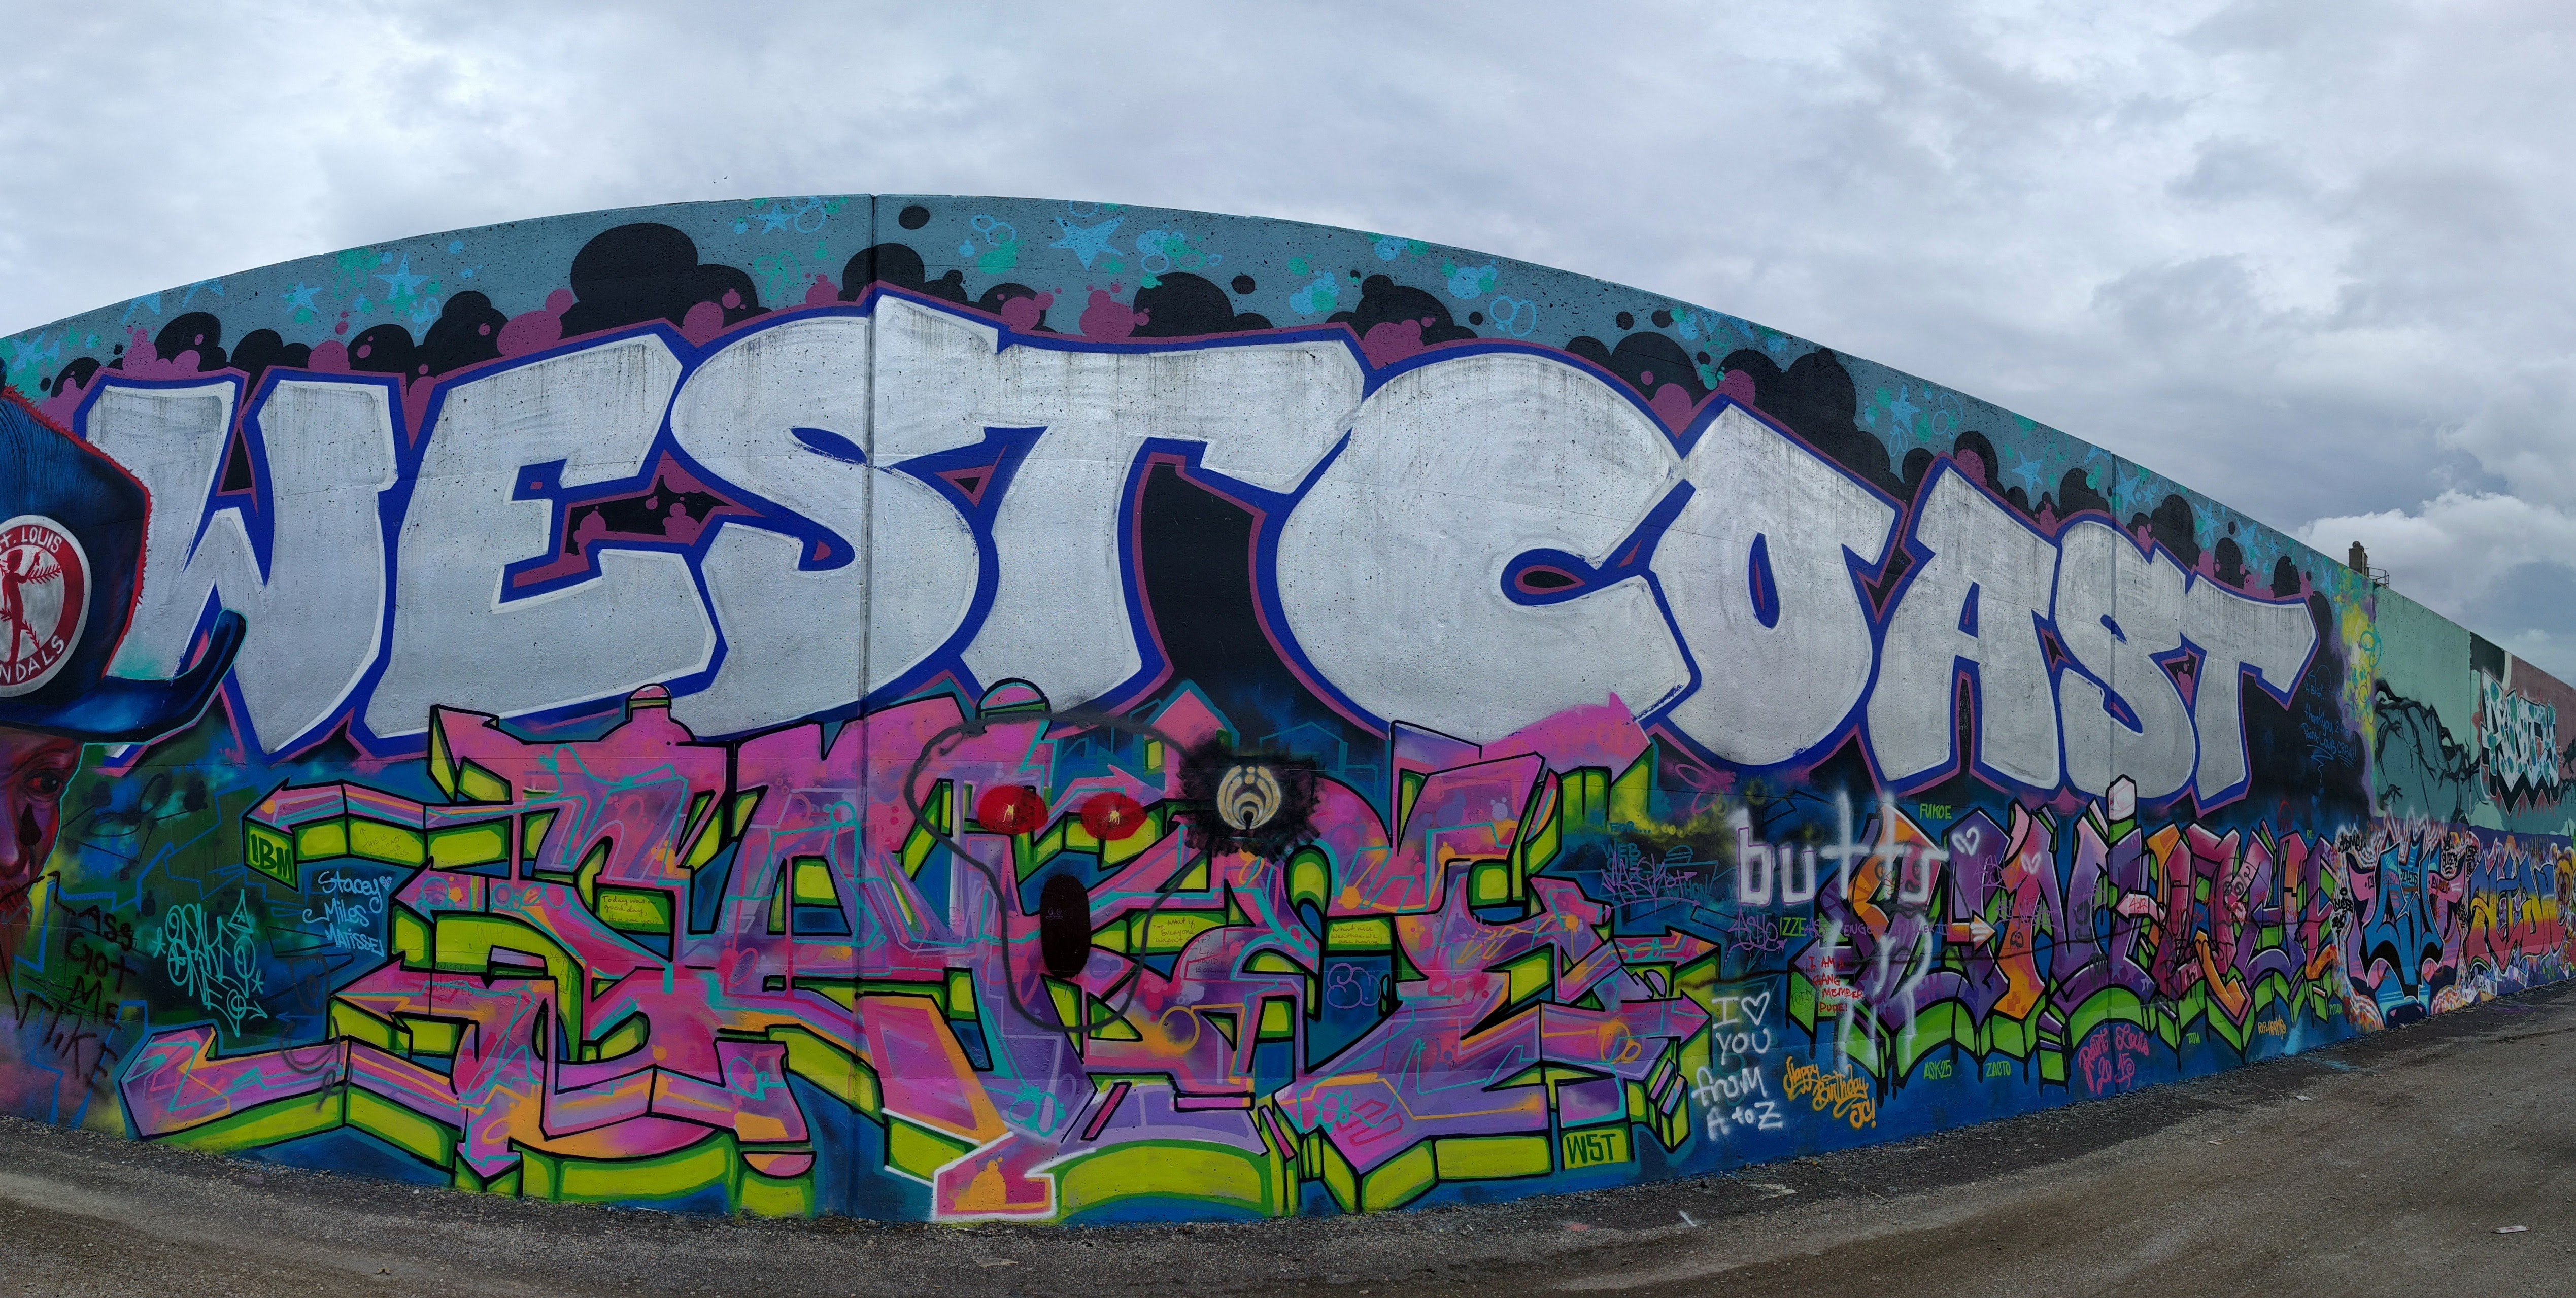 Graffiti Wall, tag saying WEST COAST